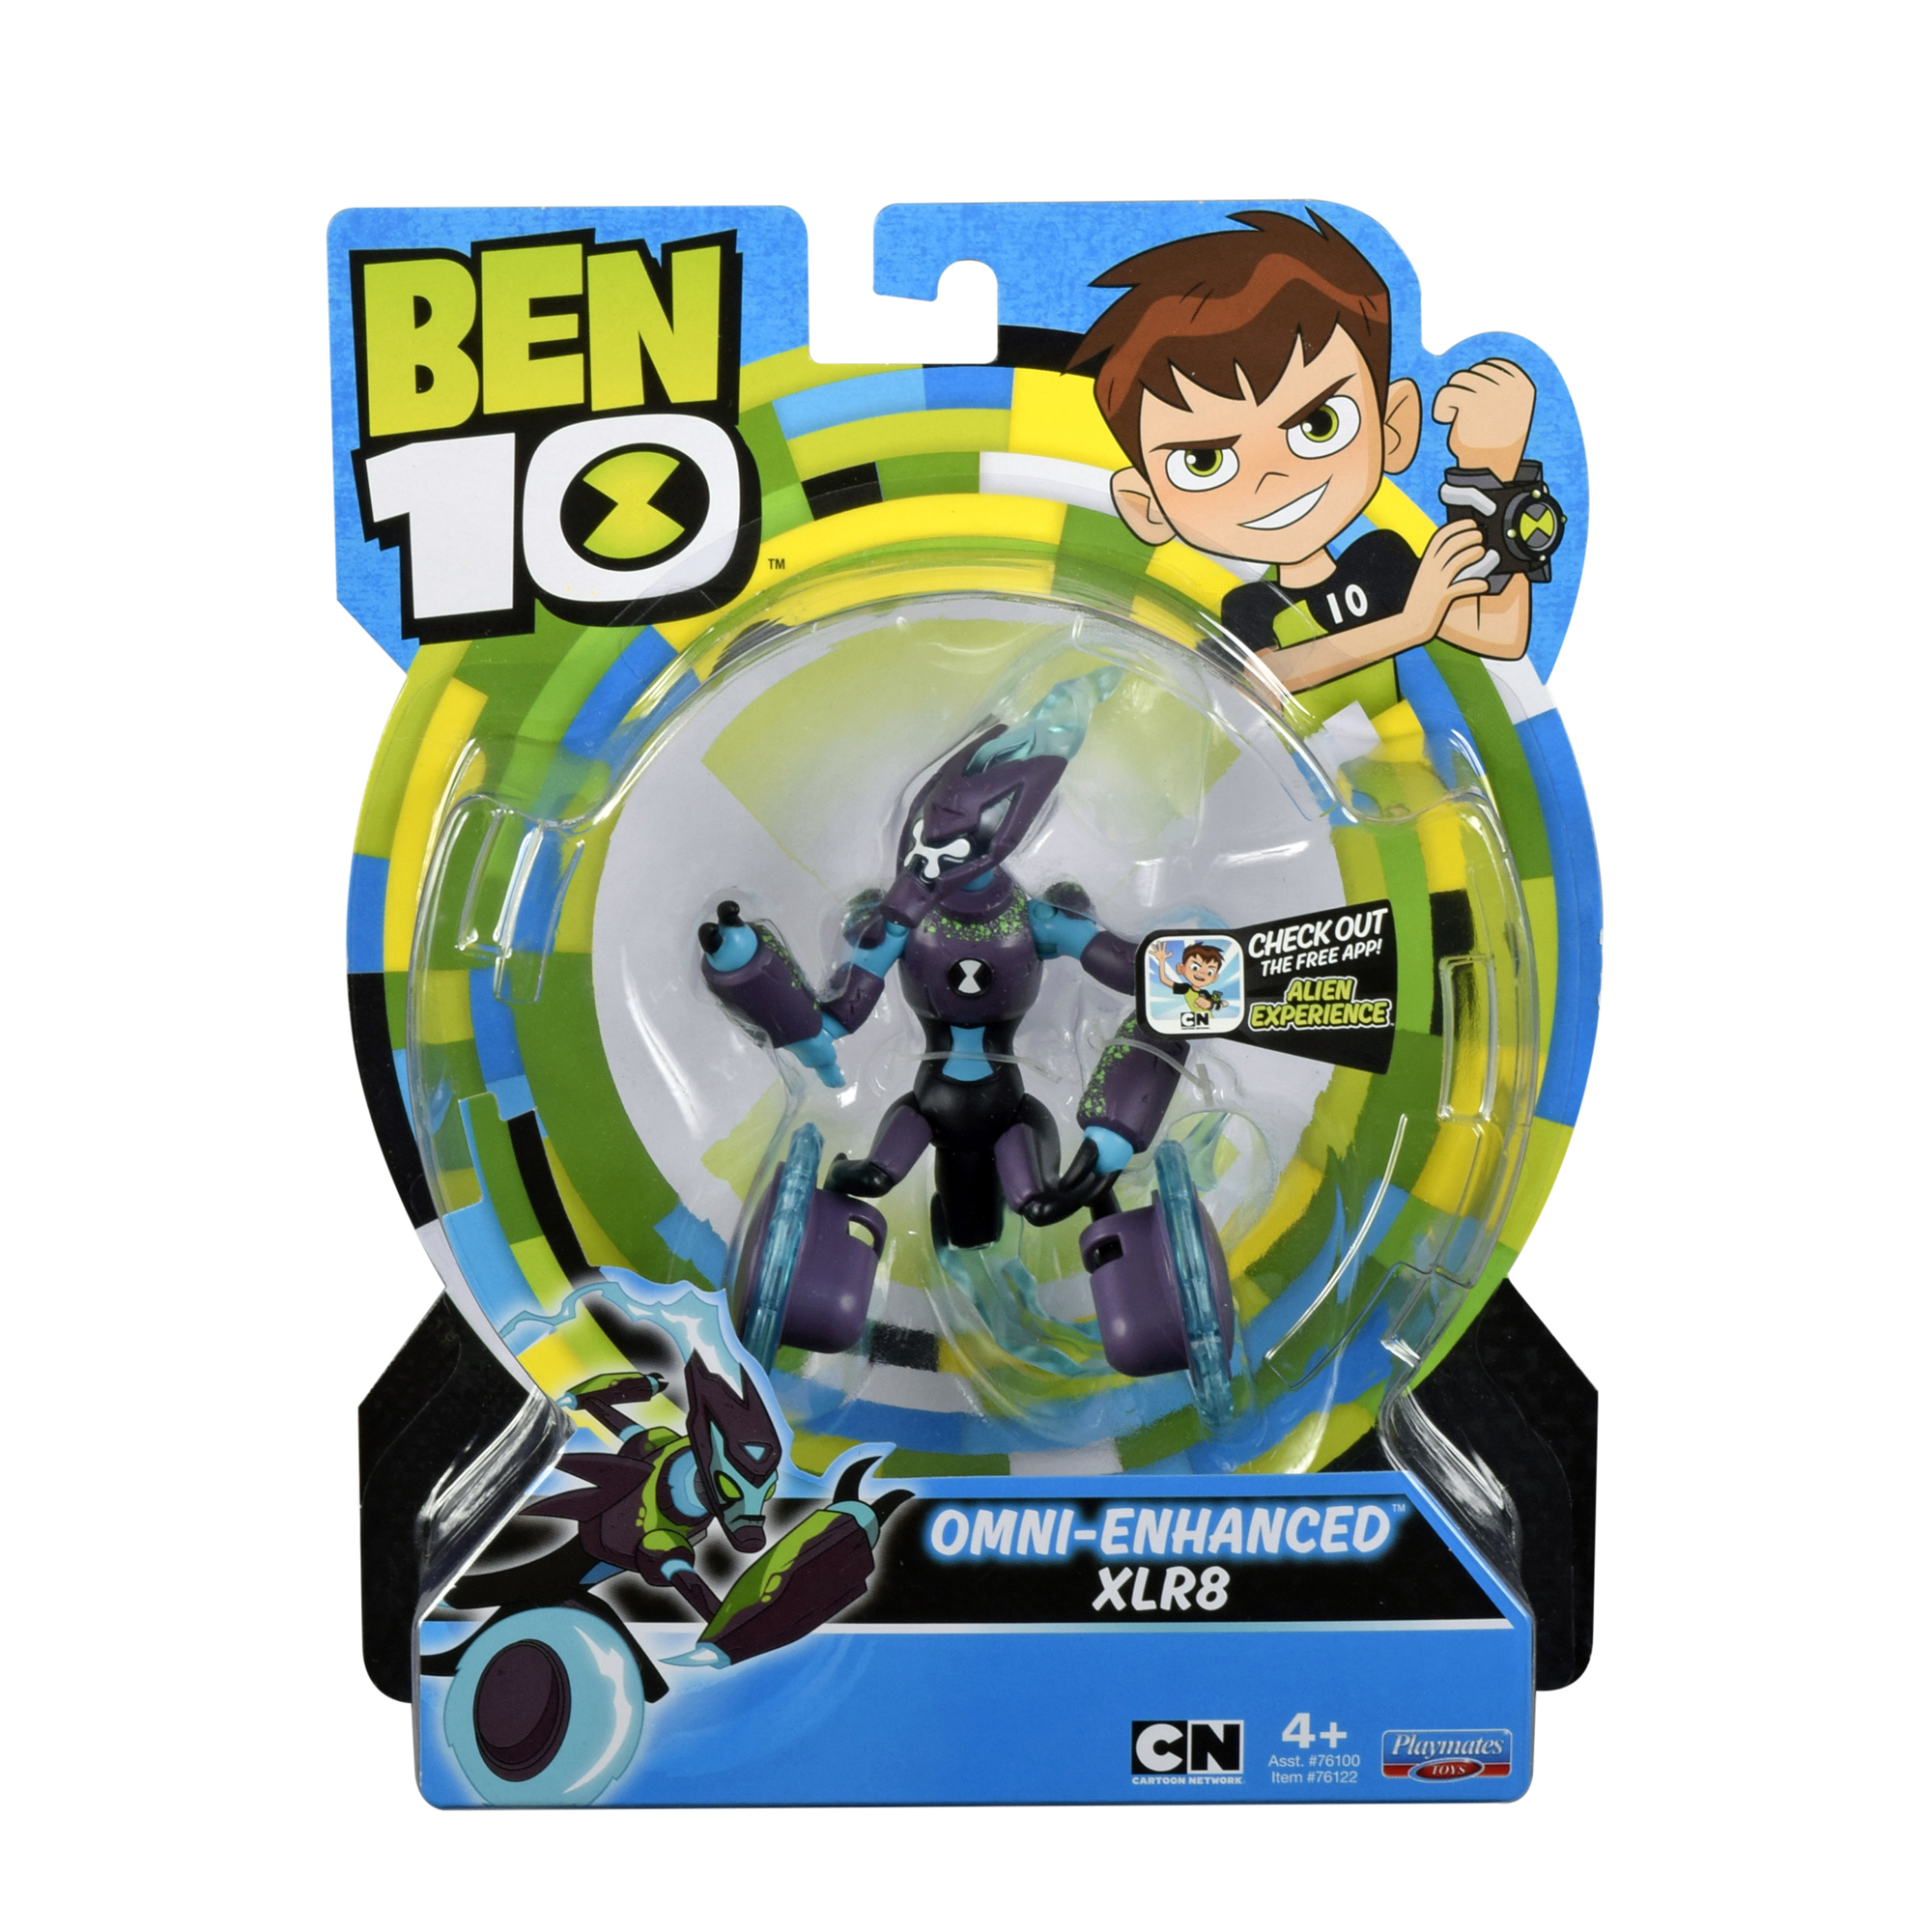 Ben 10 Omni-Enhanced XLR8 Basic Figure - image 4 of 5